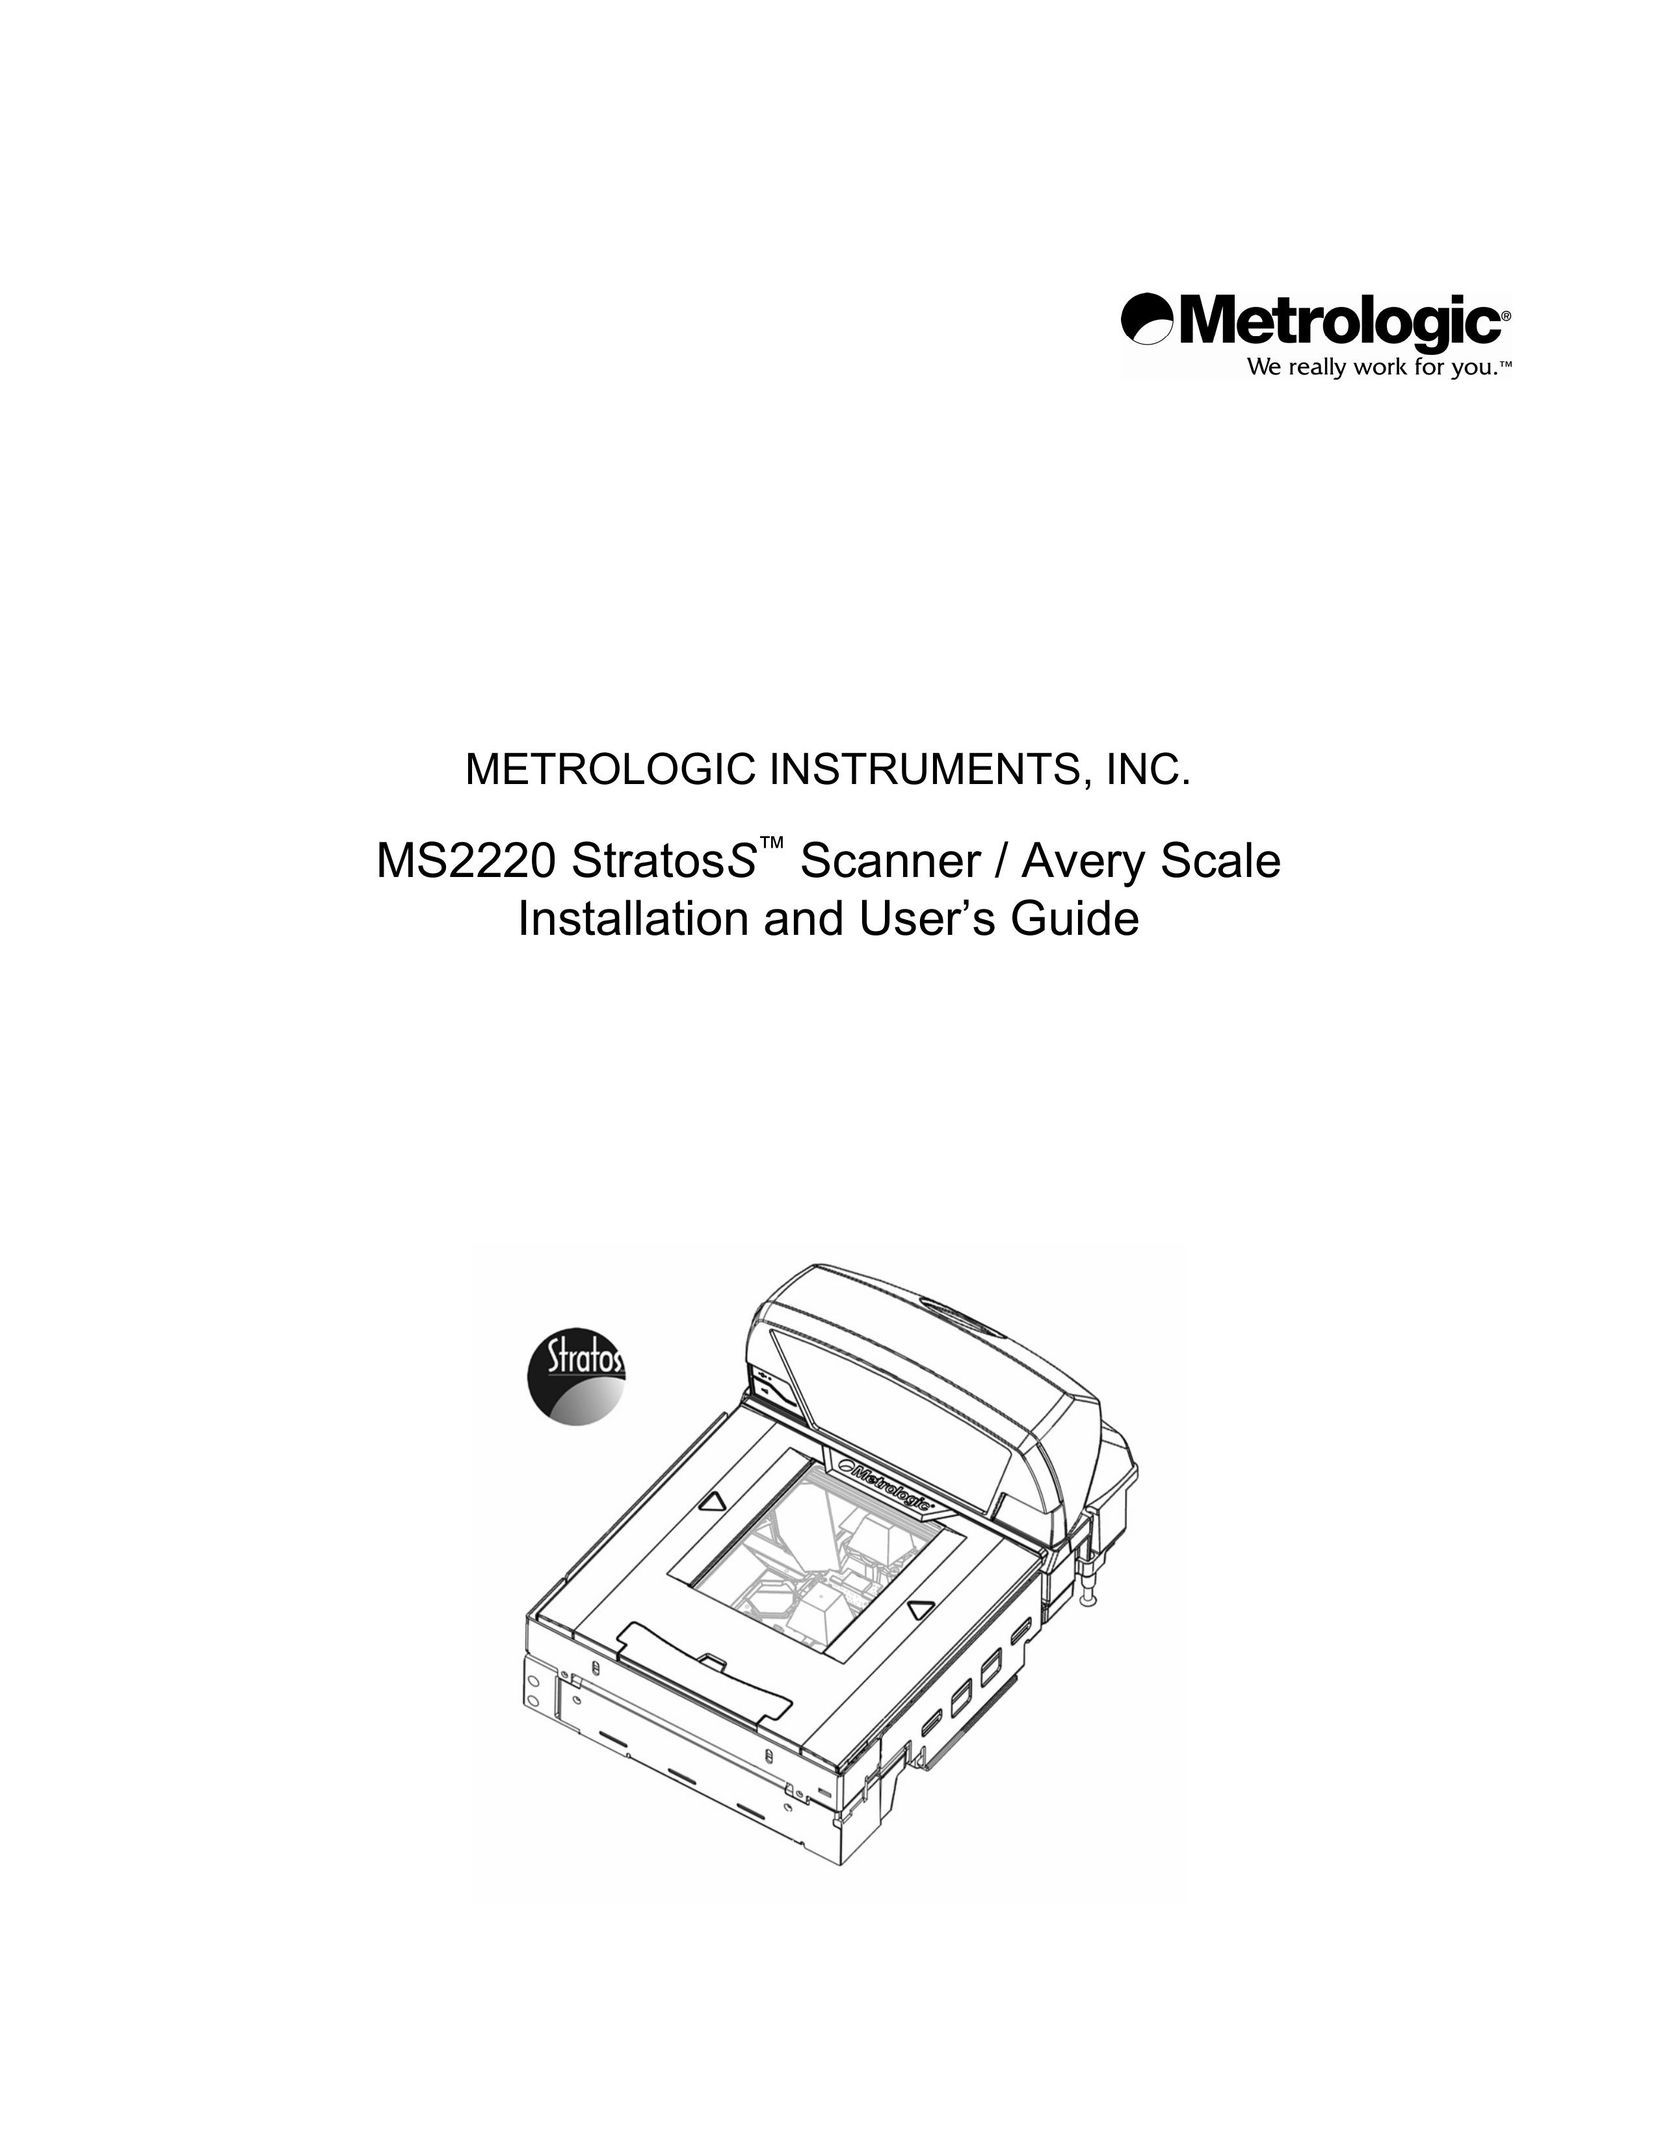 Metrologic Instruments MS2220 All in One Printer User Manual